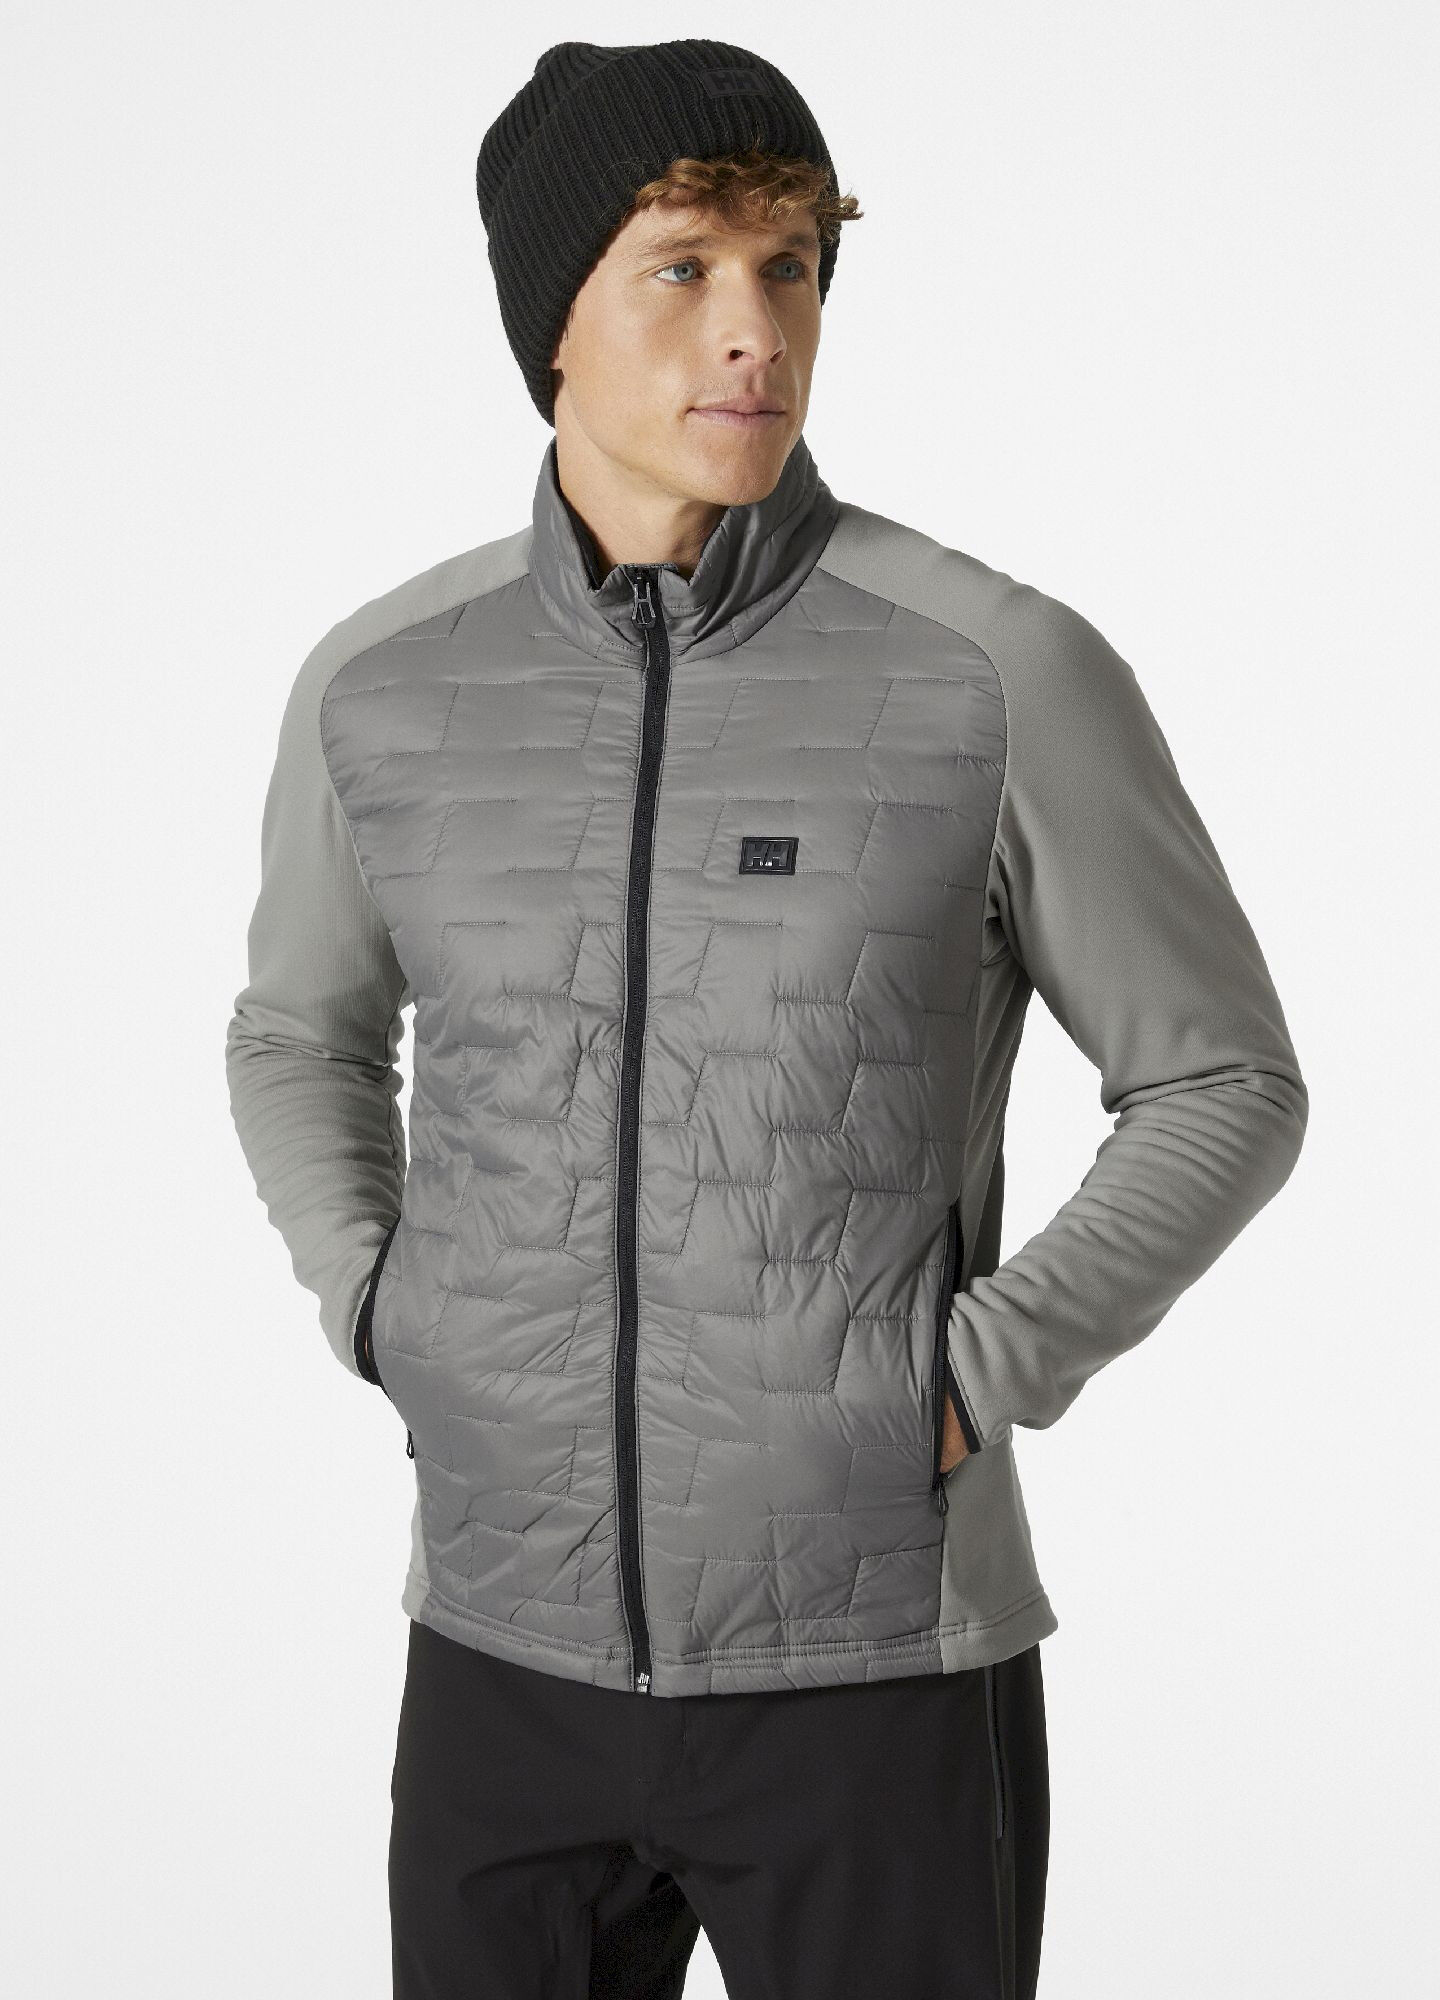 Helly Hansen Lifaloft Hybrid Insulator Jacket - Synthetic jacket - Men's